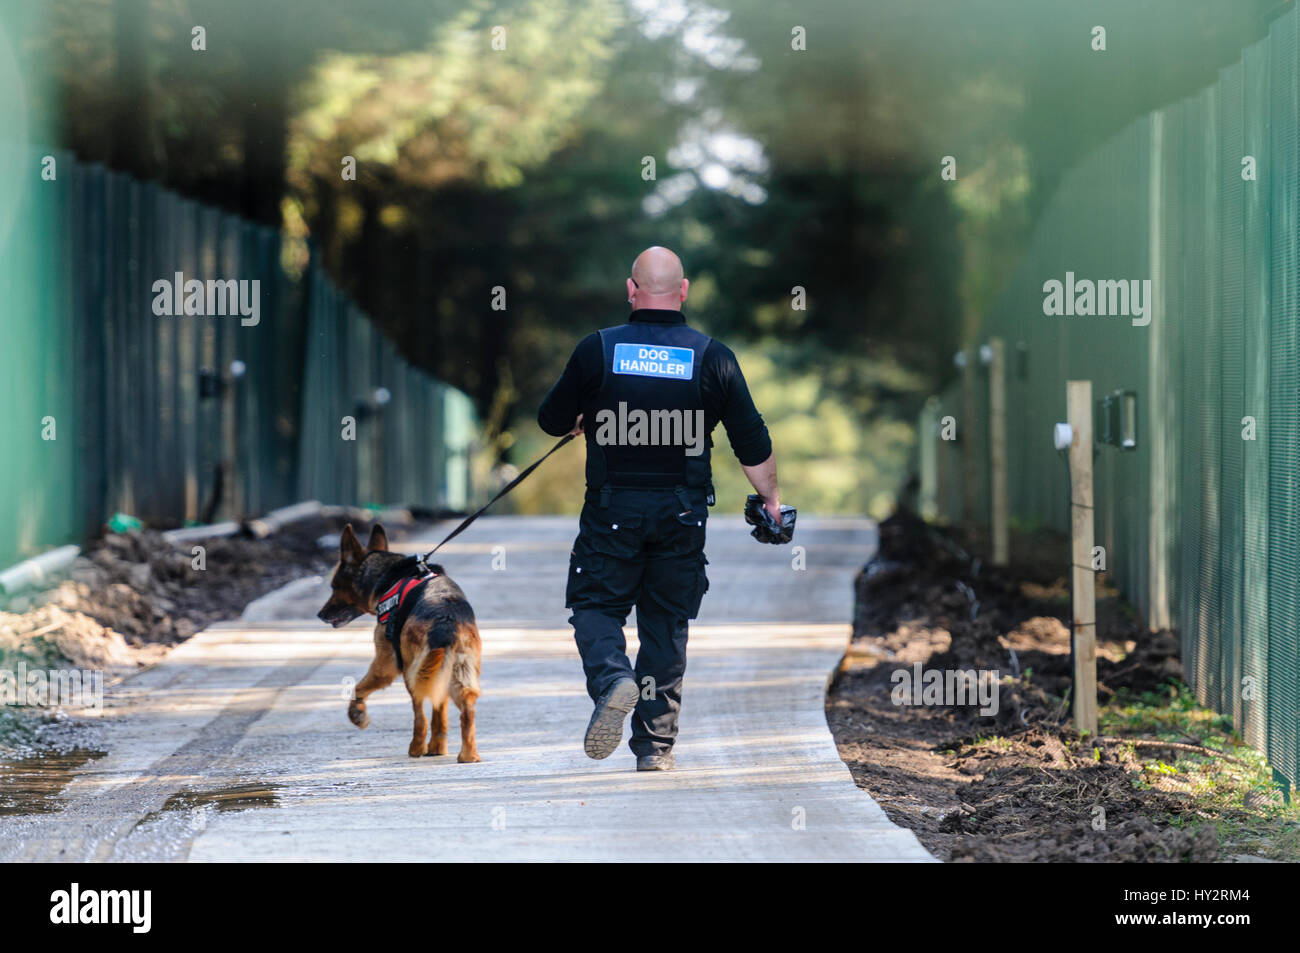 A security guard dog handler patrols an area with a German Shepherd guard dog Stock Photo